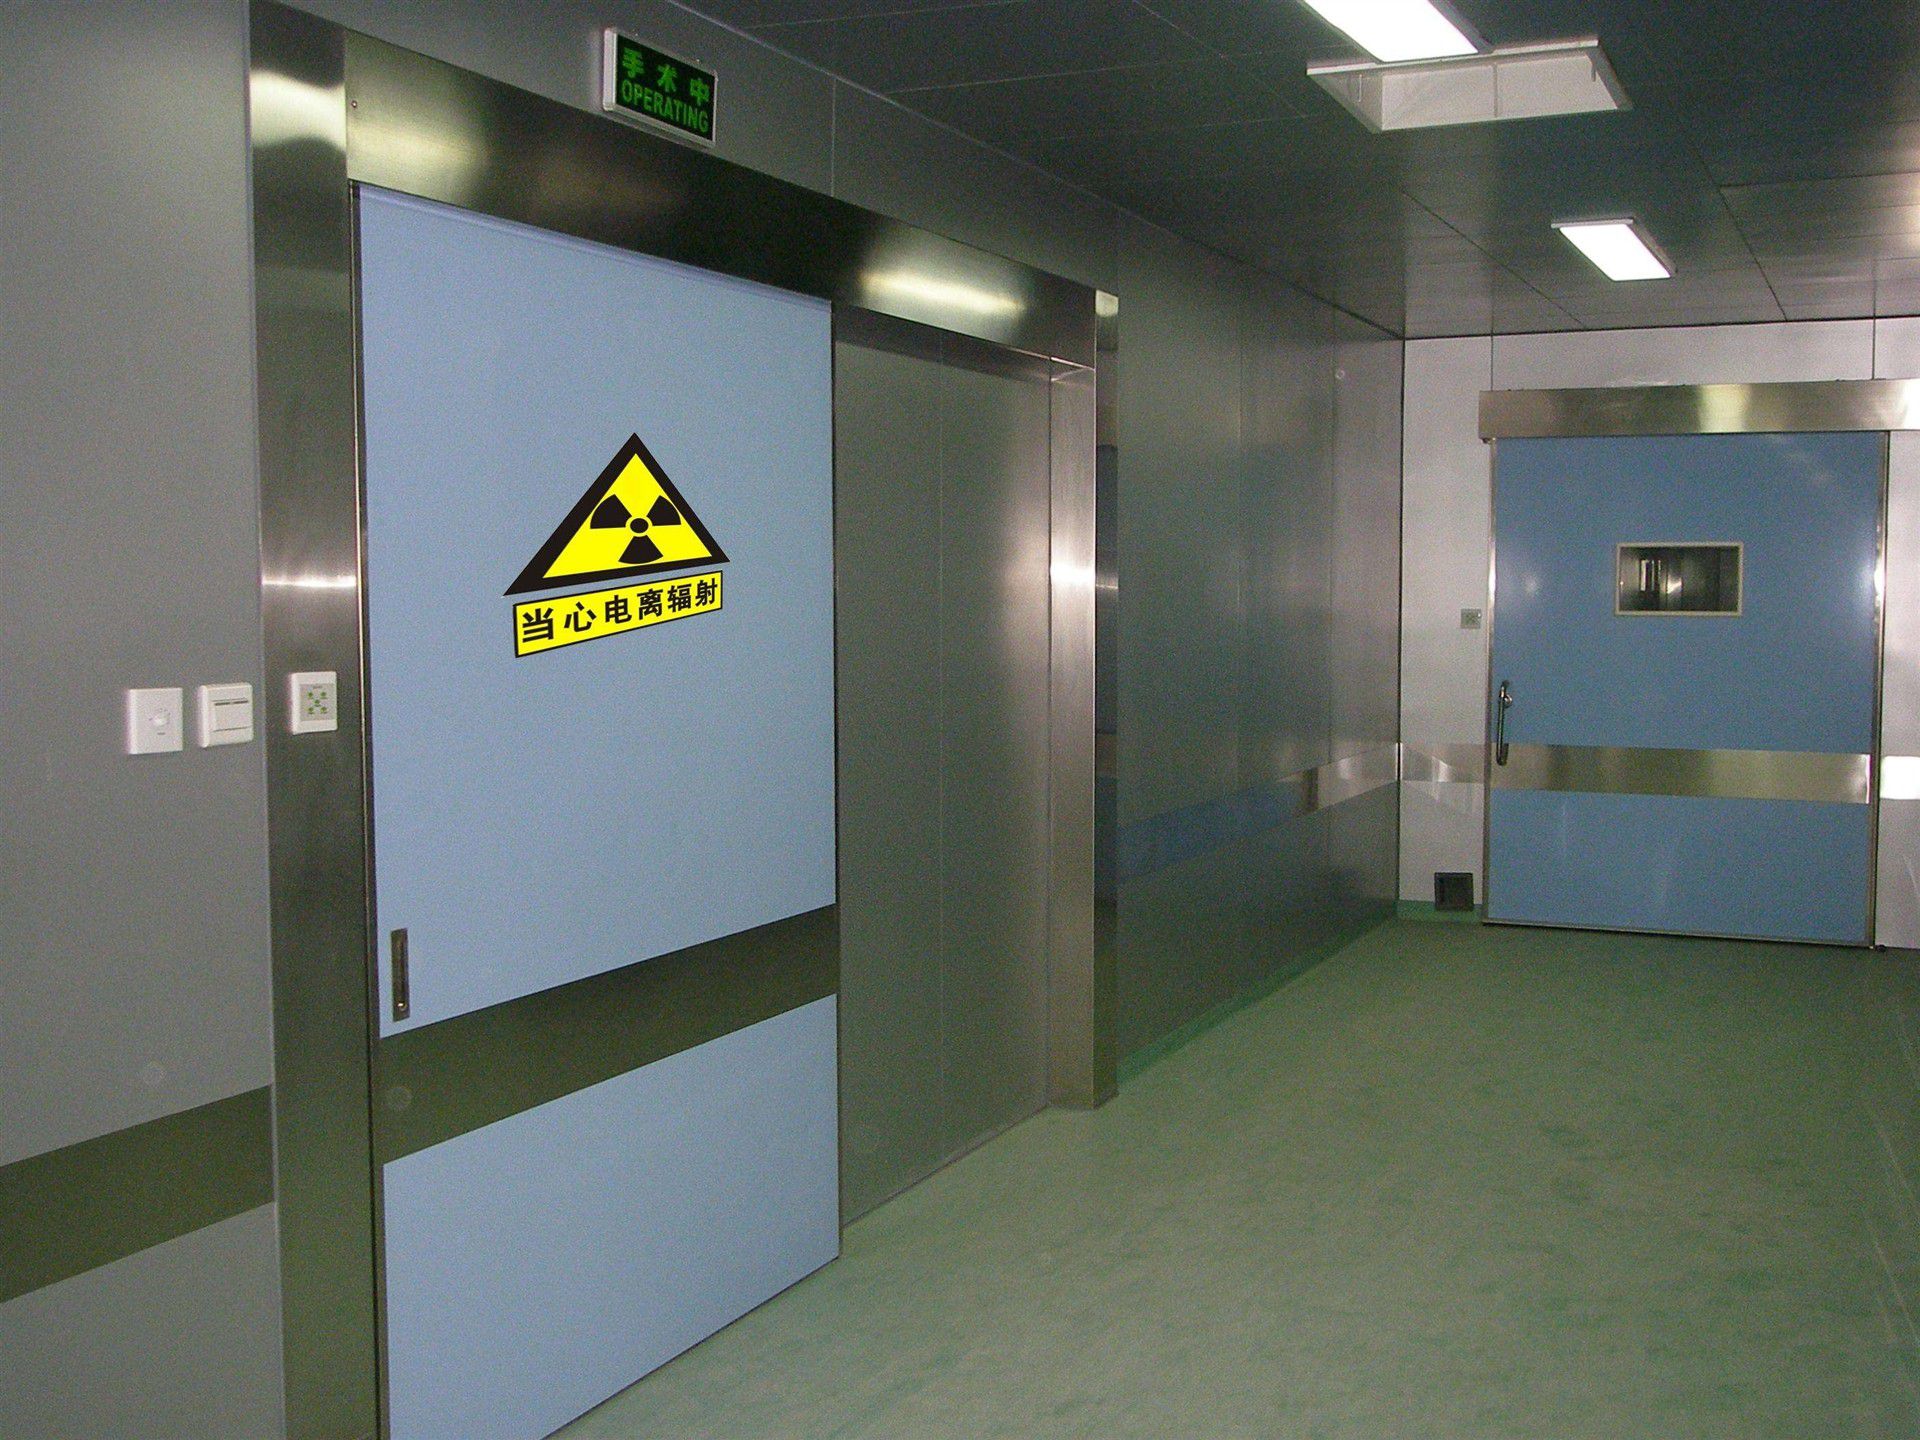 CT室铅门,铅箱,3mm铅板,CT室铅板,放射科铅板,铅板厂家-大埔CT室铅板公司